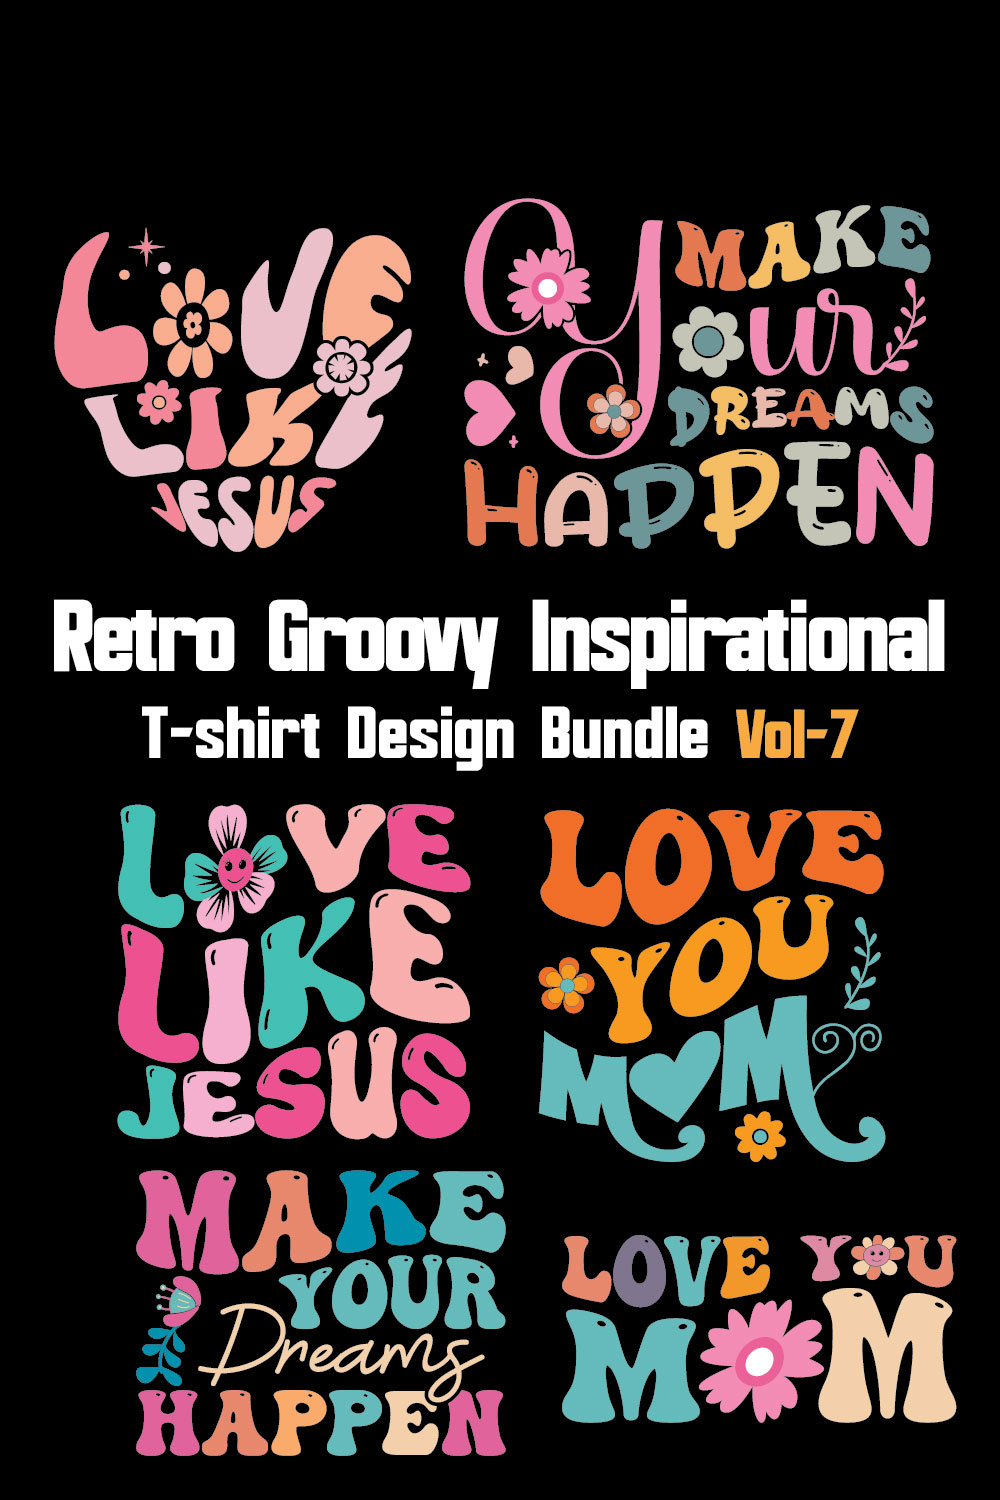 Retro Groovy Inspirational T-shirt Design Bundle Vol-7 pinterest preview image.